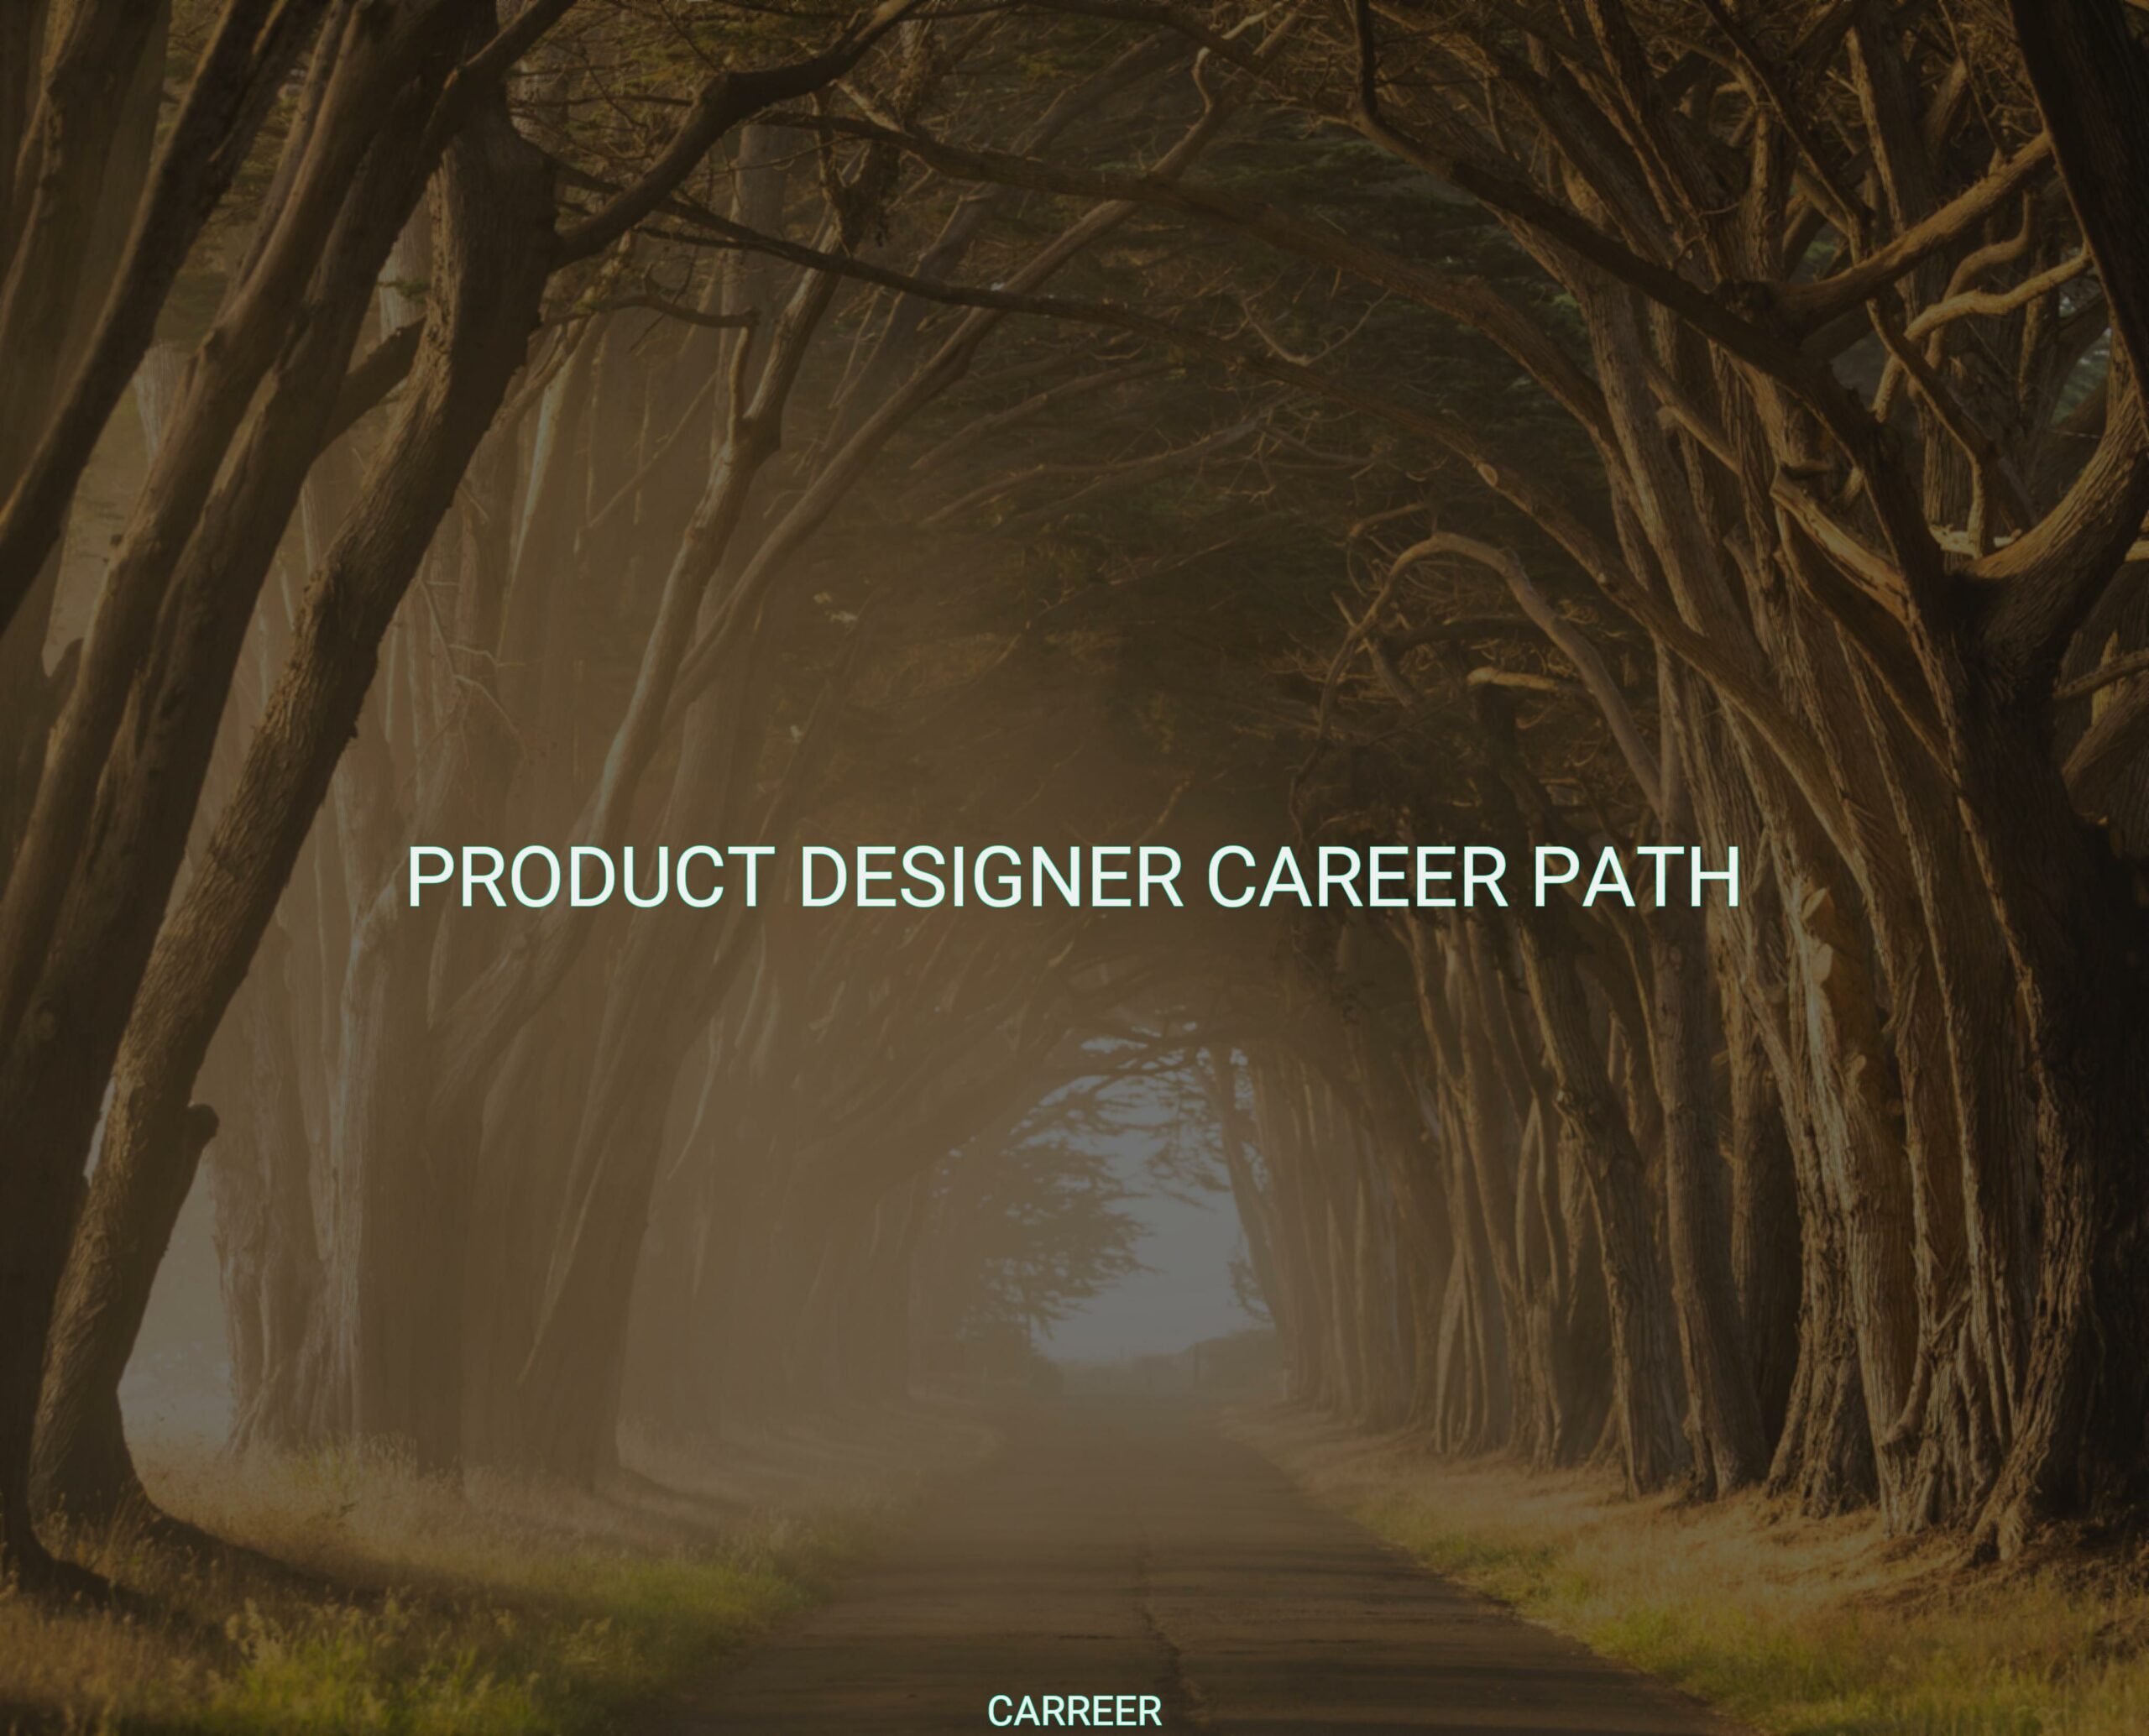 Product designer career path